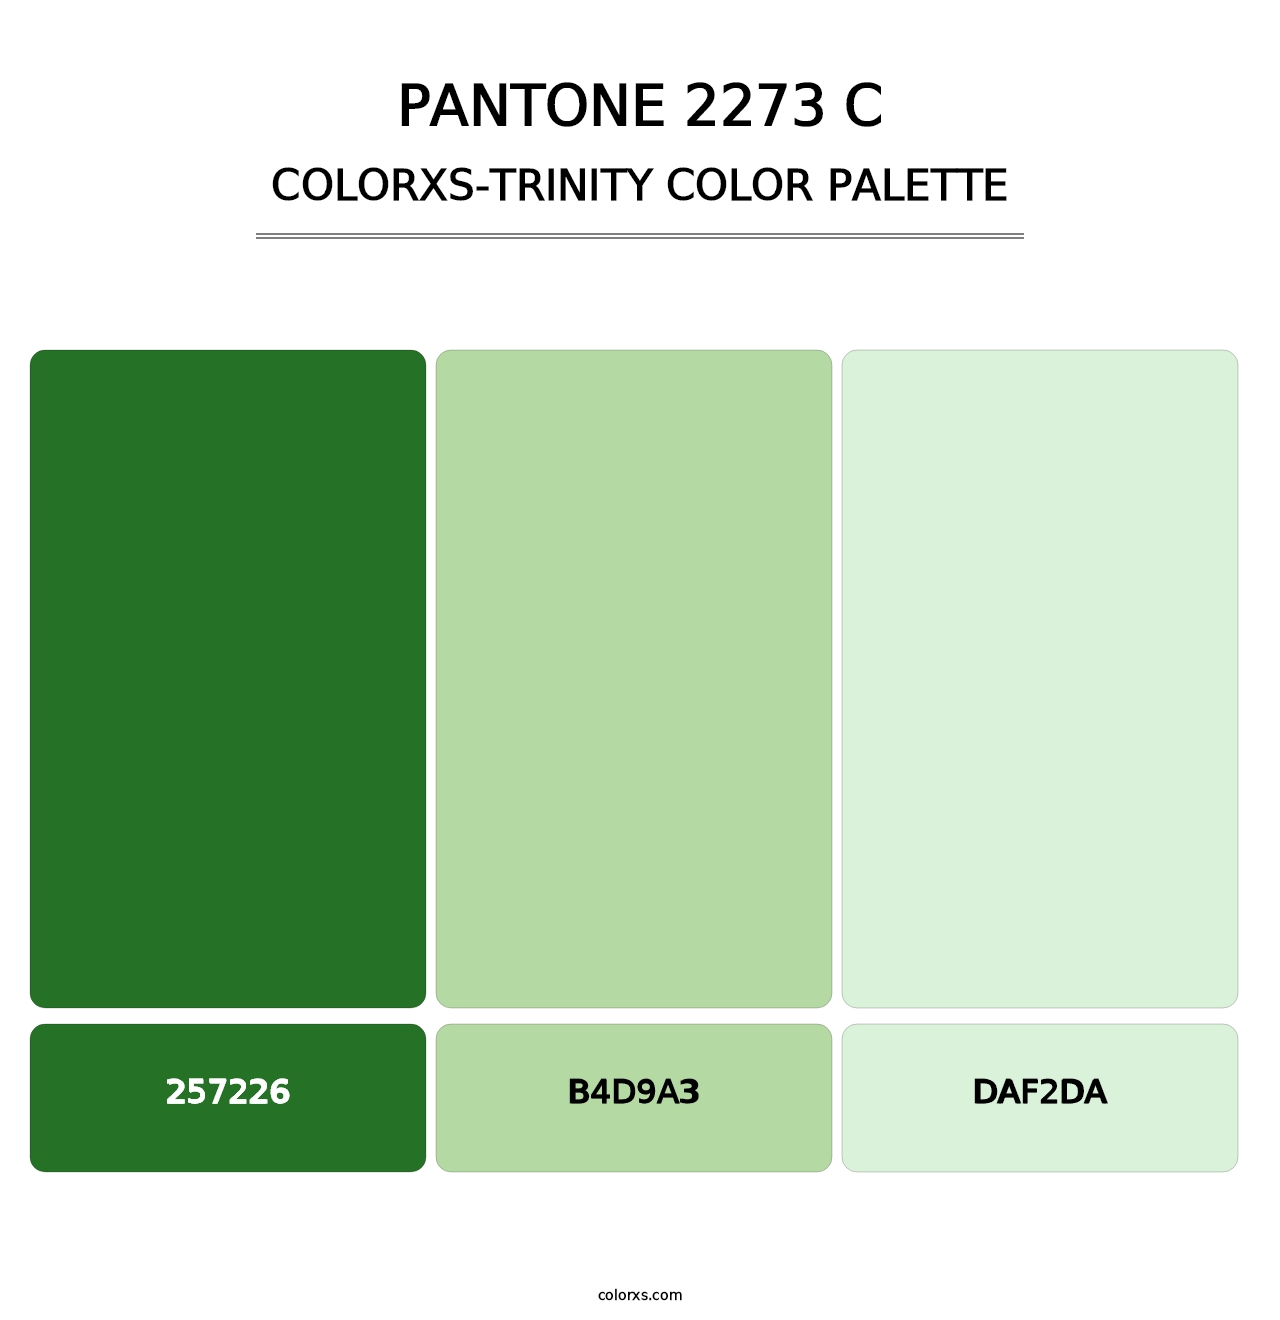 PANTONE 2273 C - Colorxs Trinity Palette